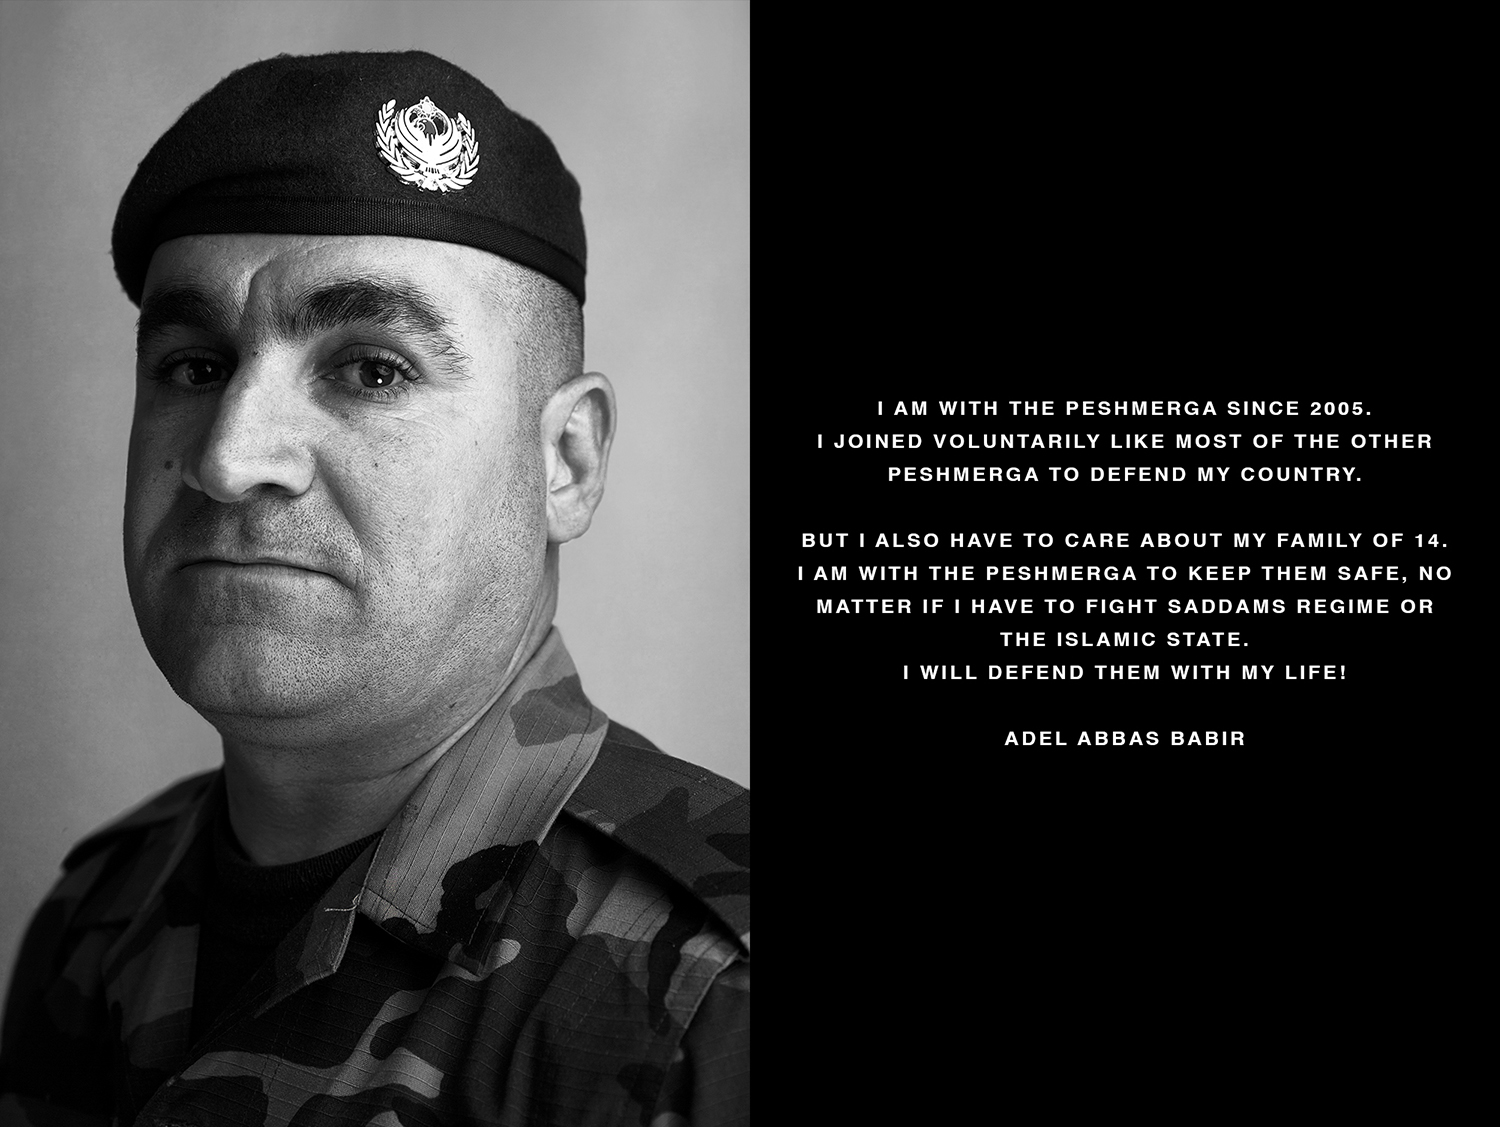 Portrait and Interview of a kurdish Peshmerga soldier